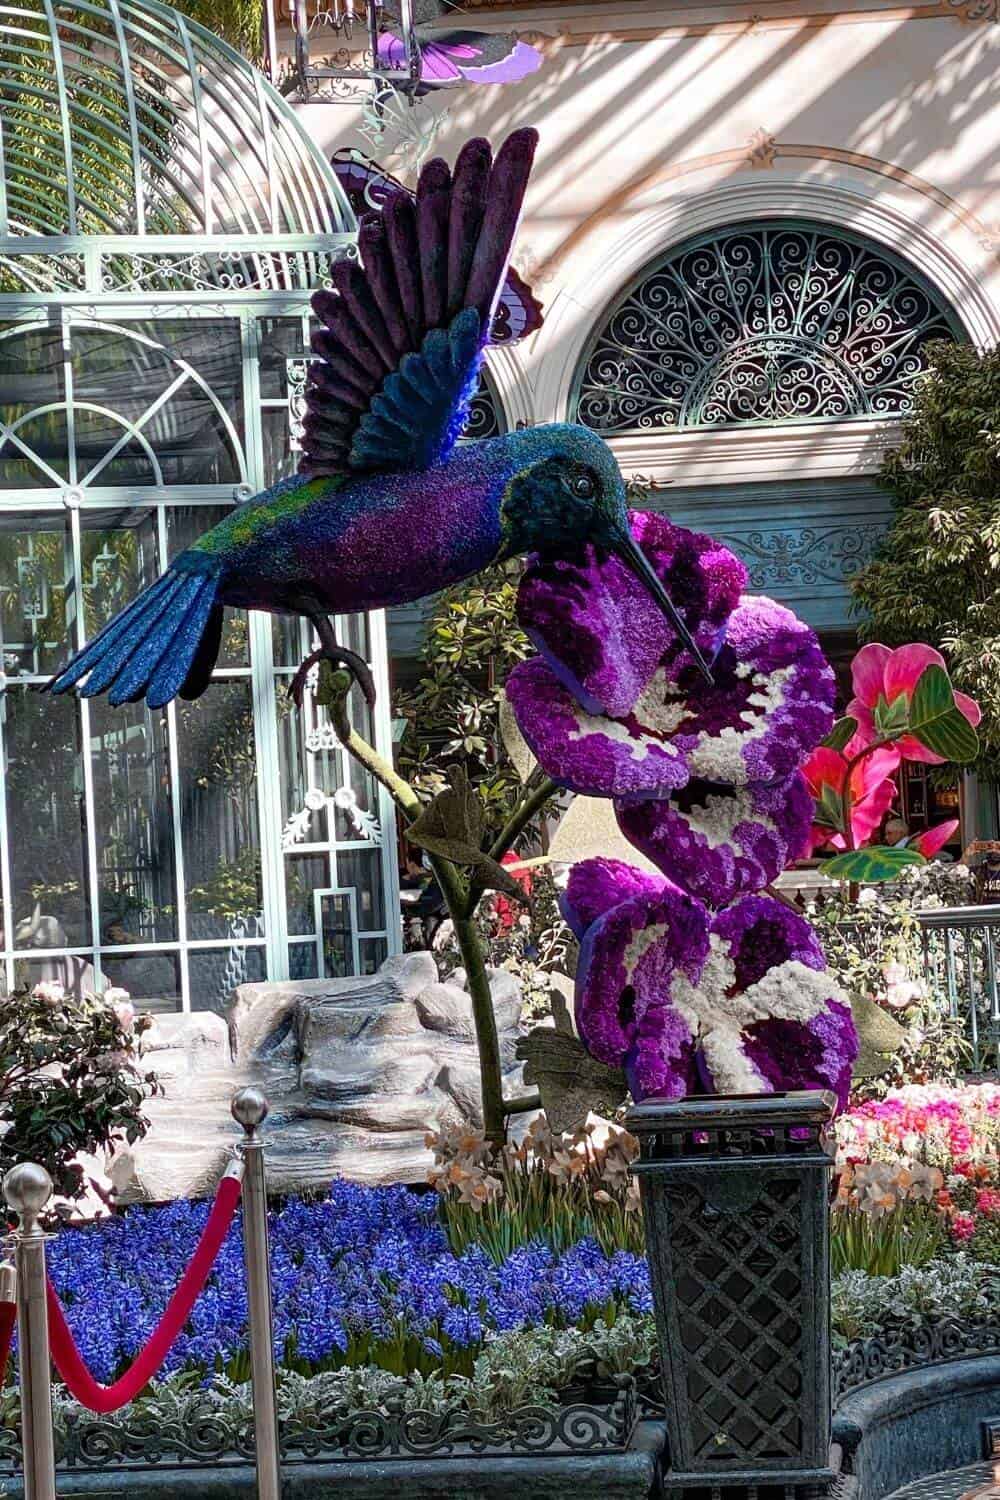 Bellagio luxury hotel conservatory spring London garden flowers and humming bird display